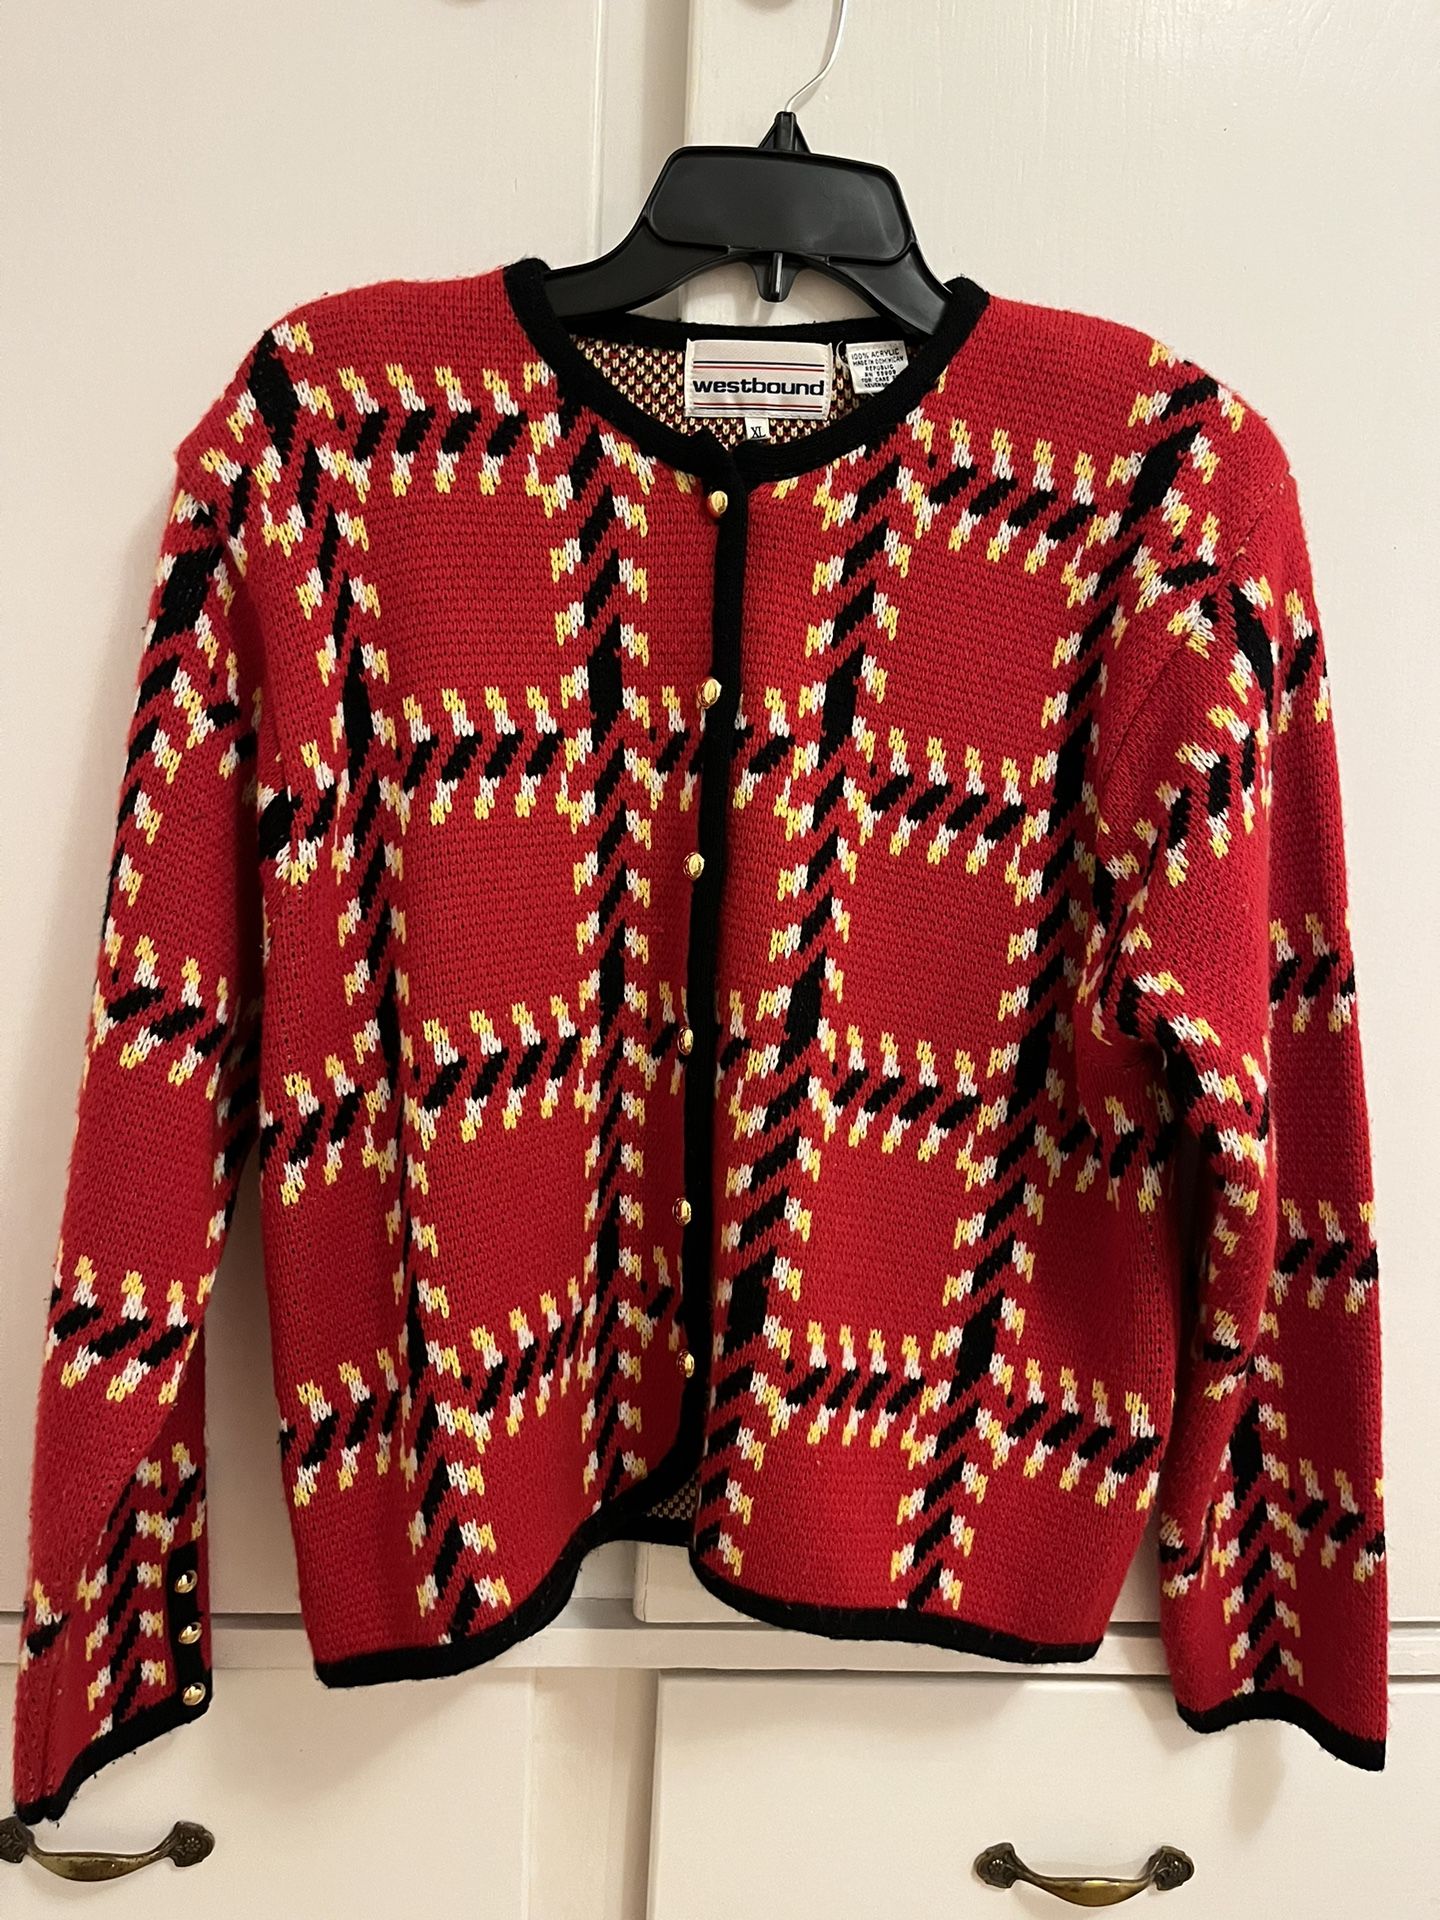 Westbound - Vintage Blazer Jacket - Plaid Knit Cardigan Sweater